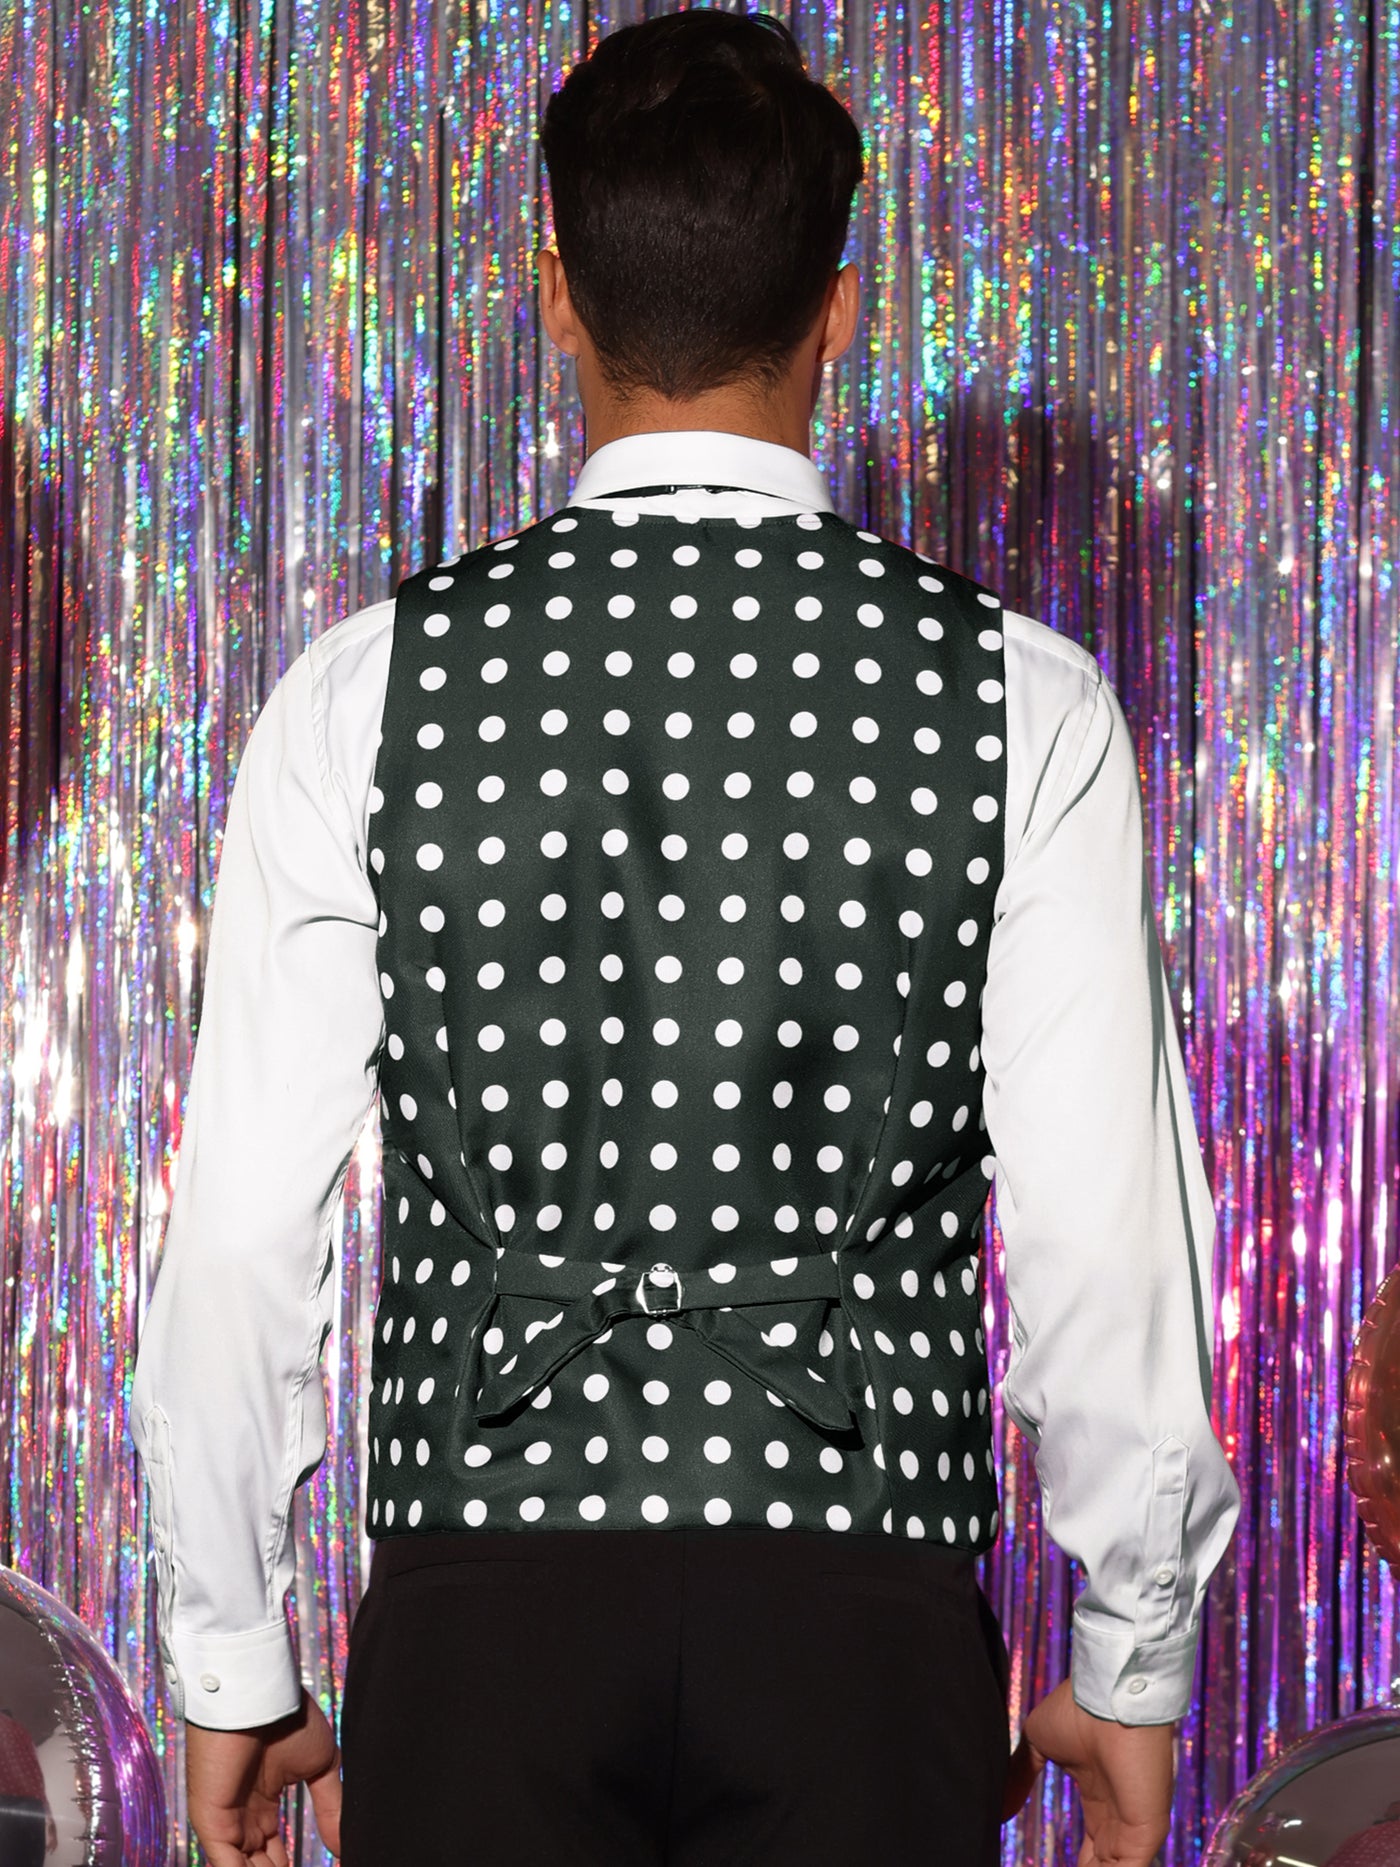 Bublédon Dress Vest for Men's Slim Fit V-Neck Sleeveless Polka Dots Pattern Waistcoat